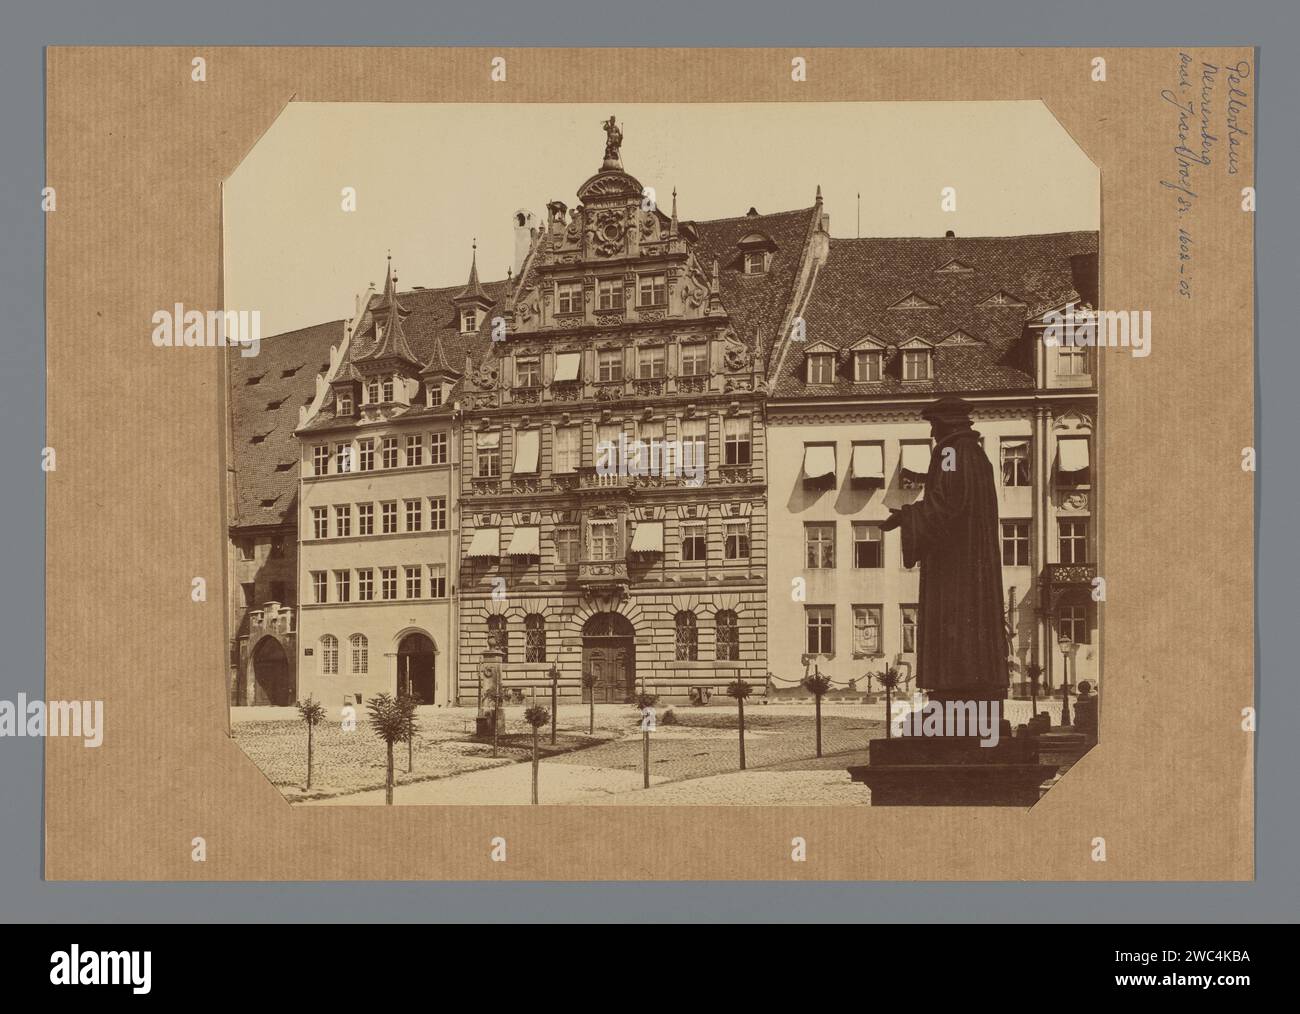 Neurenberg, Pellerhaus, anonymous, 1850 - 1890 photograph   photographic support albumen print  Pellerhaus Stock Photo